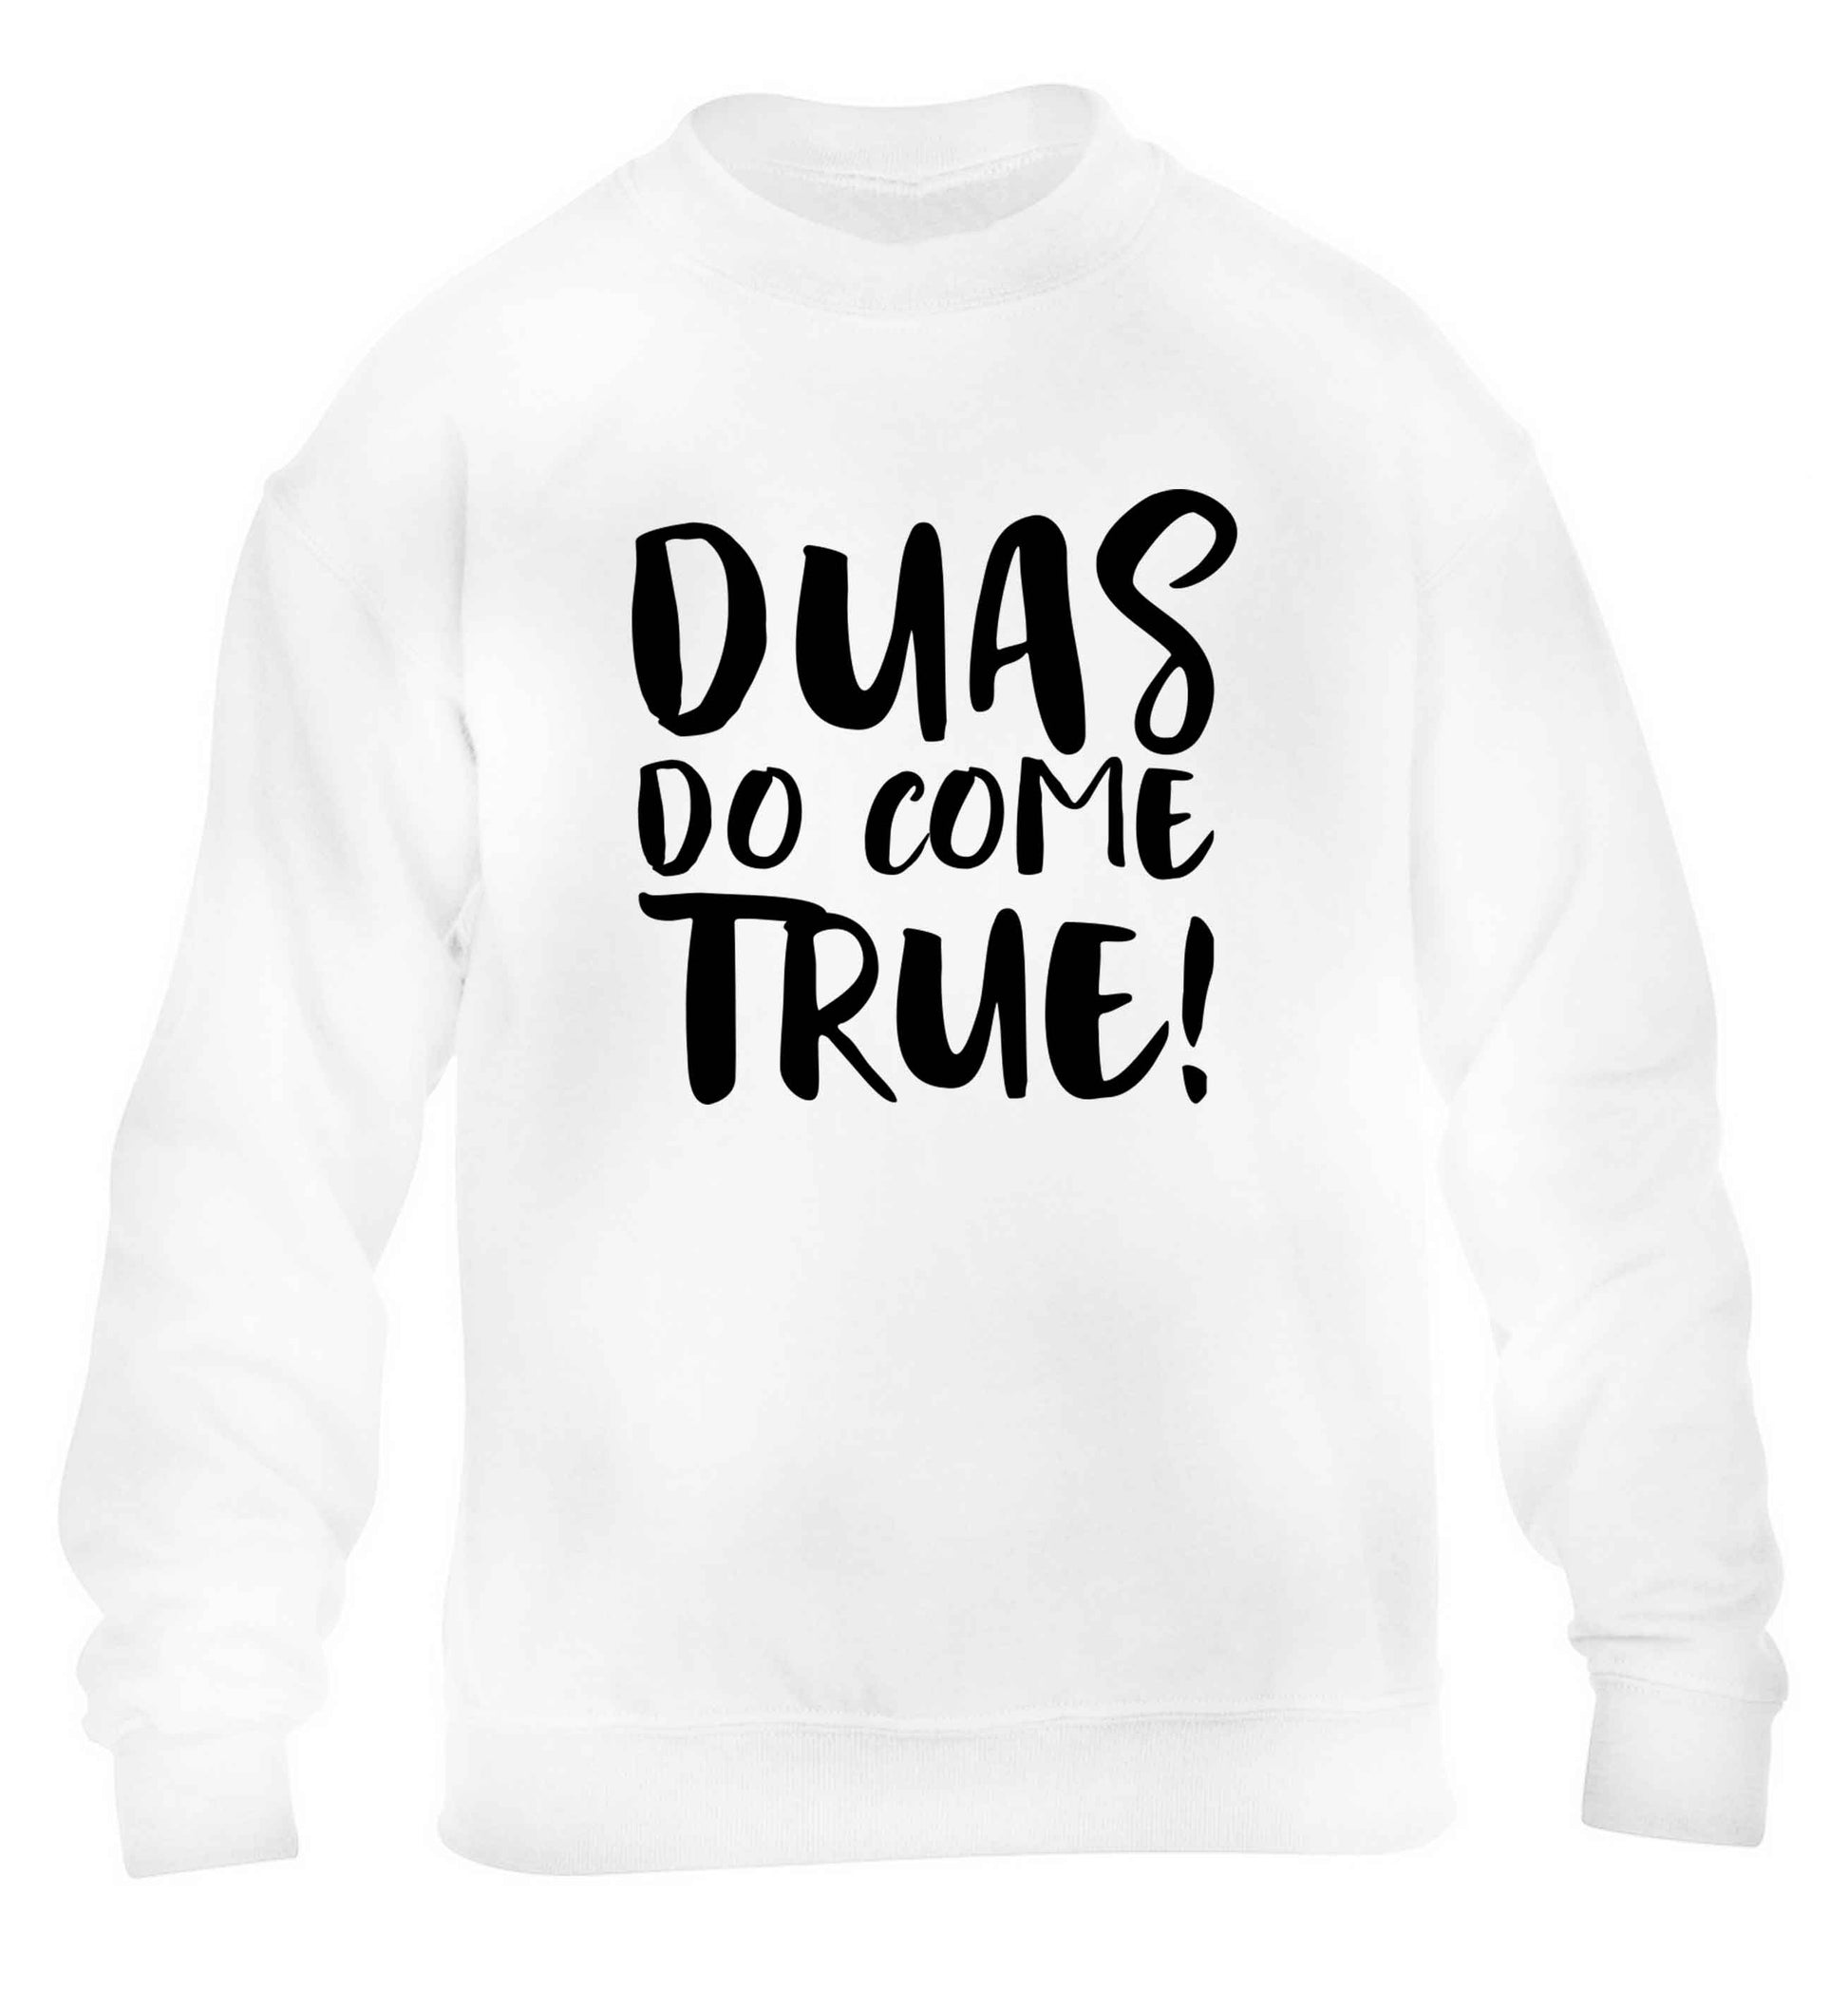 Duas do come true children's white sweater 12-13 Years